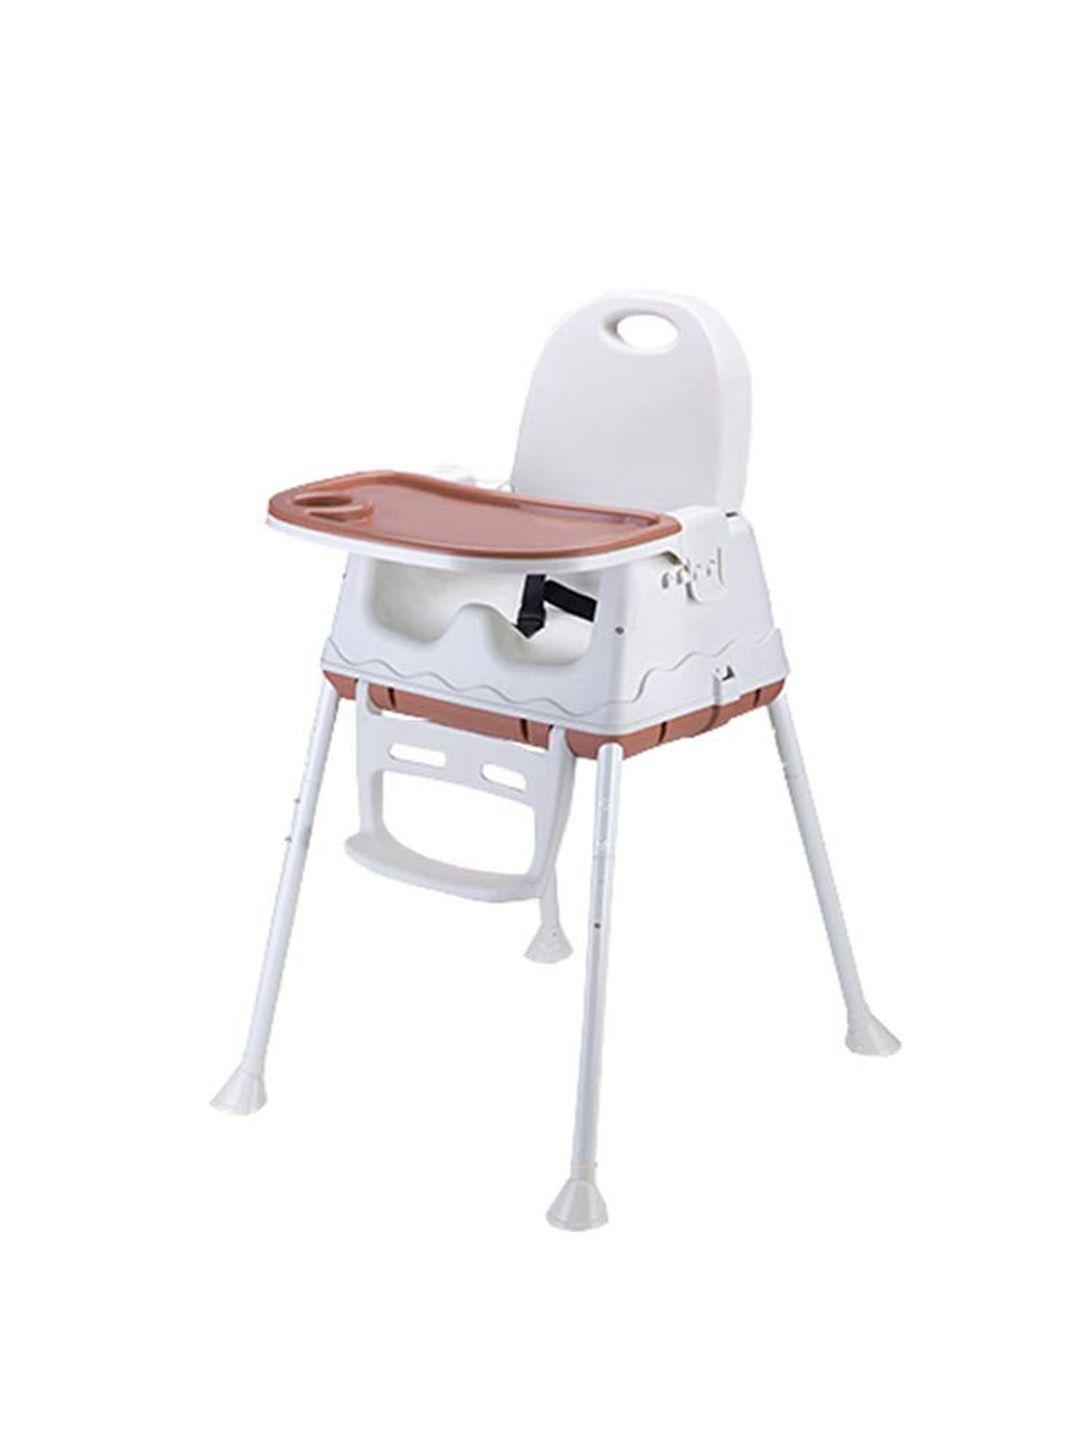 syga brown & white baby feeding high chair